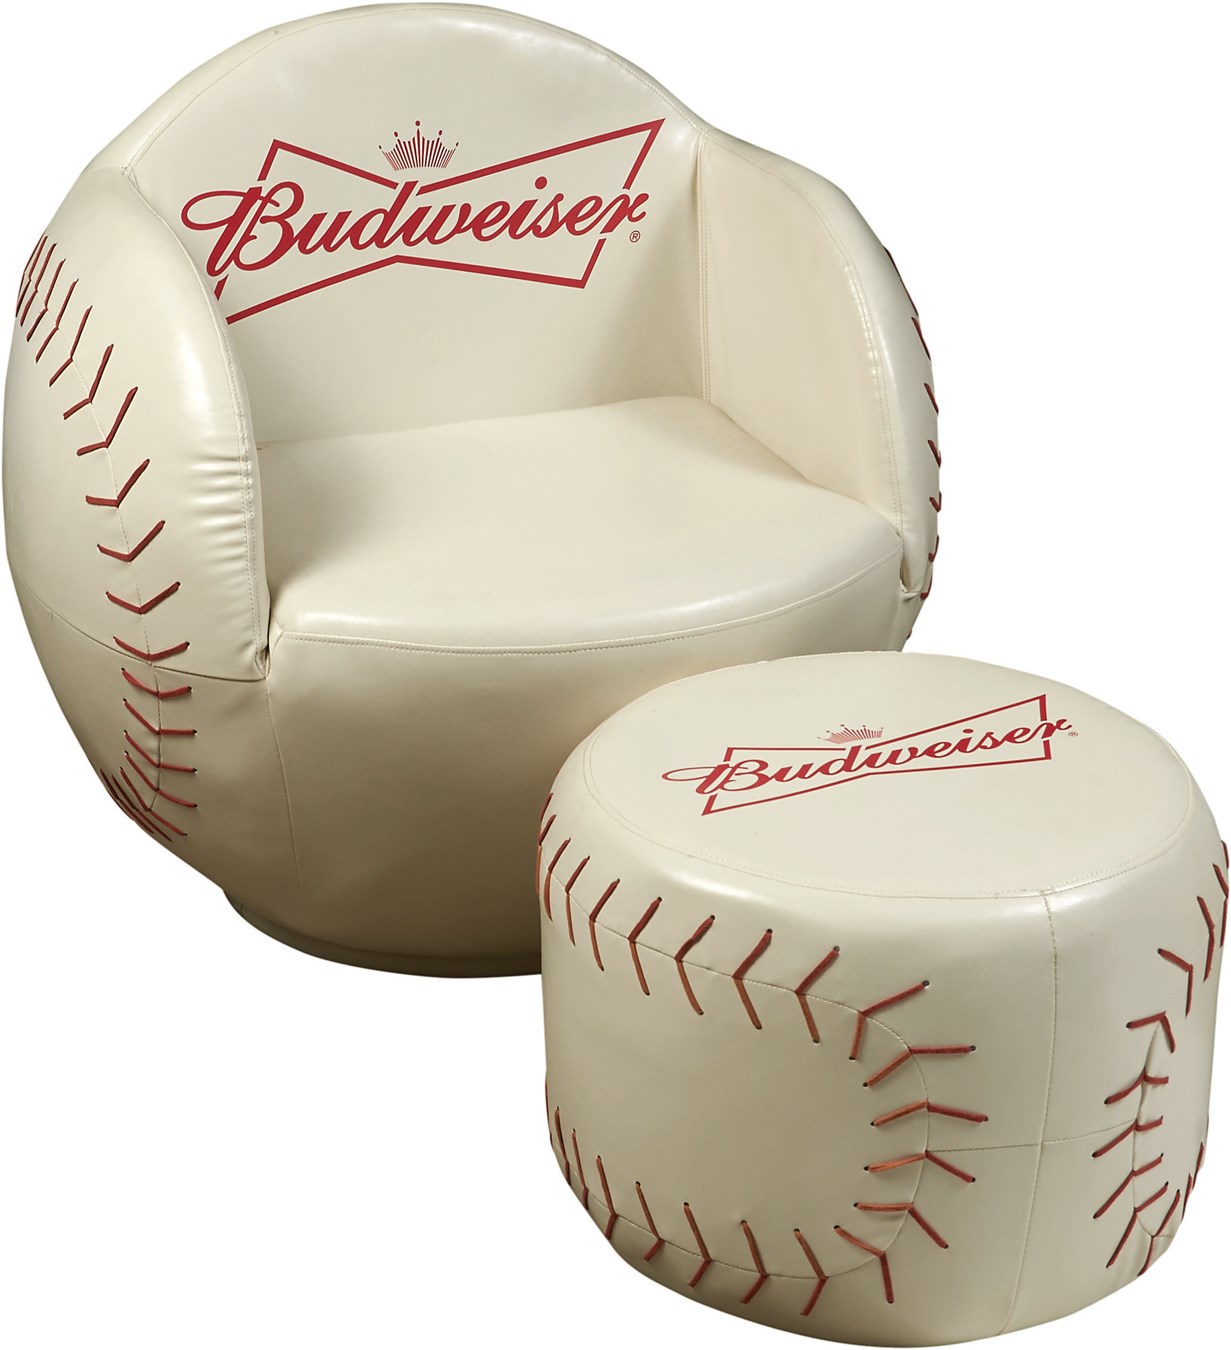 Budweiser Promotional Baseball Chair and Ottoman